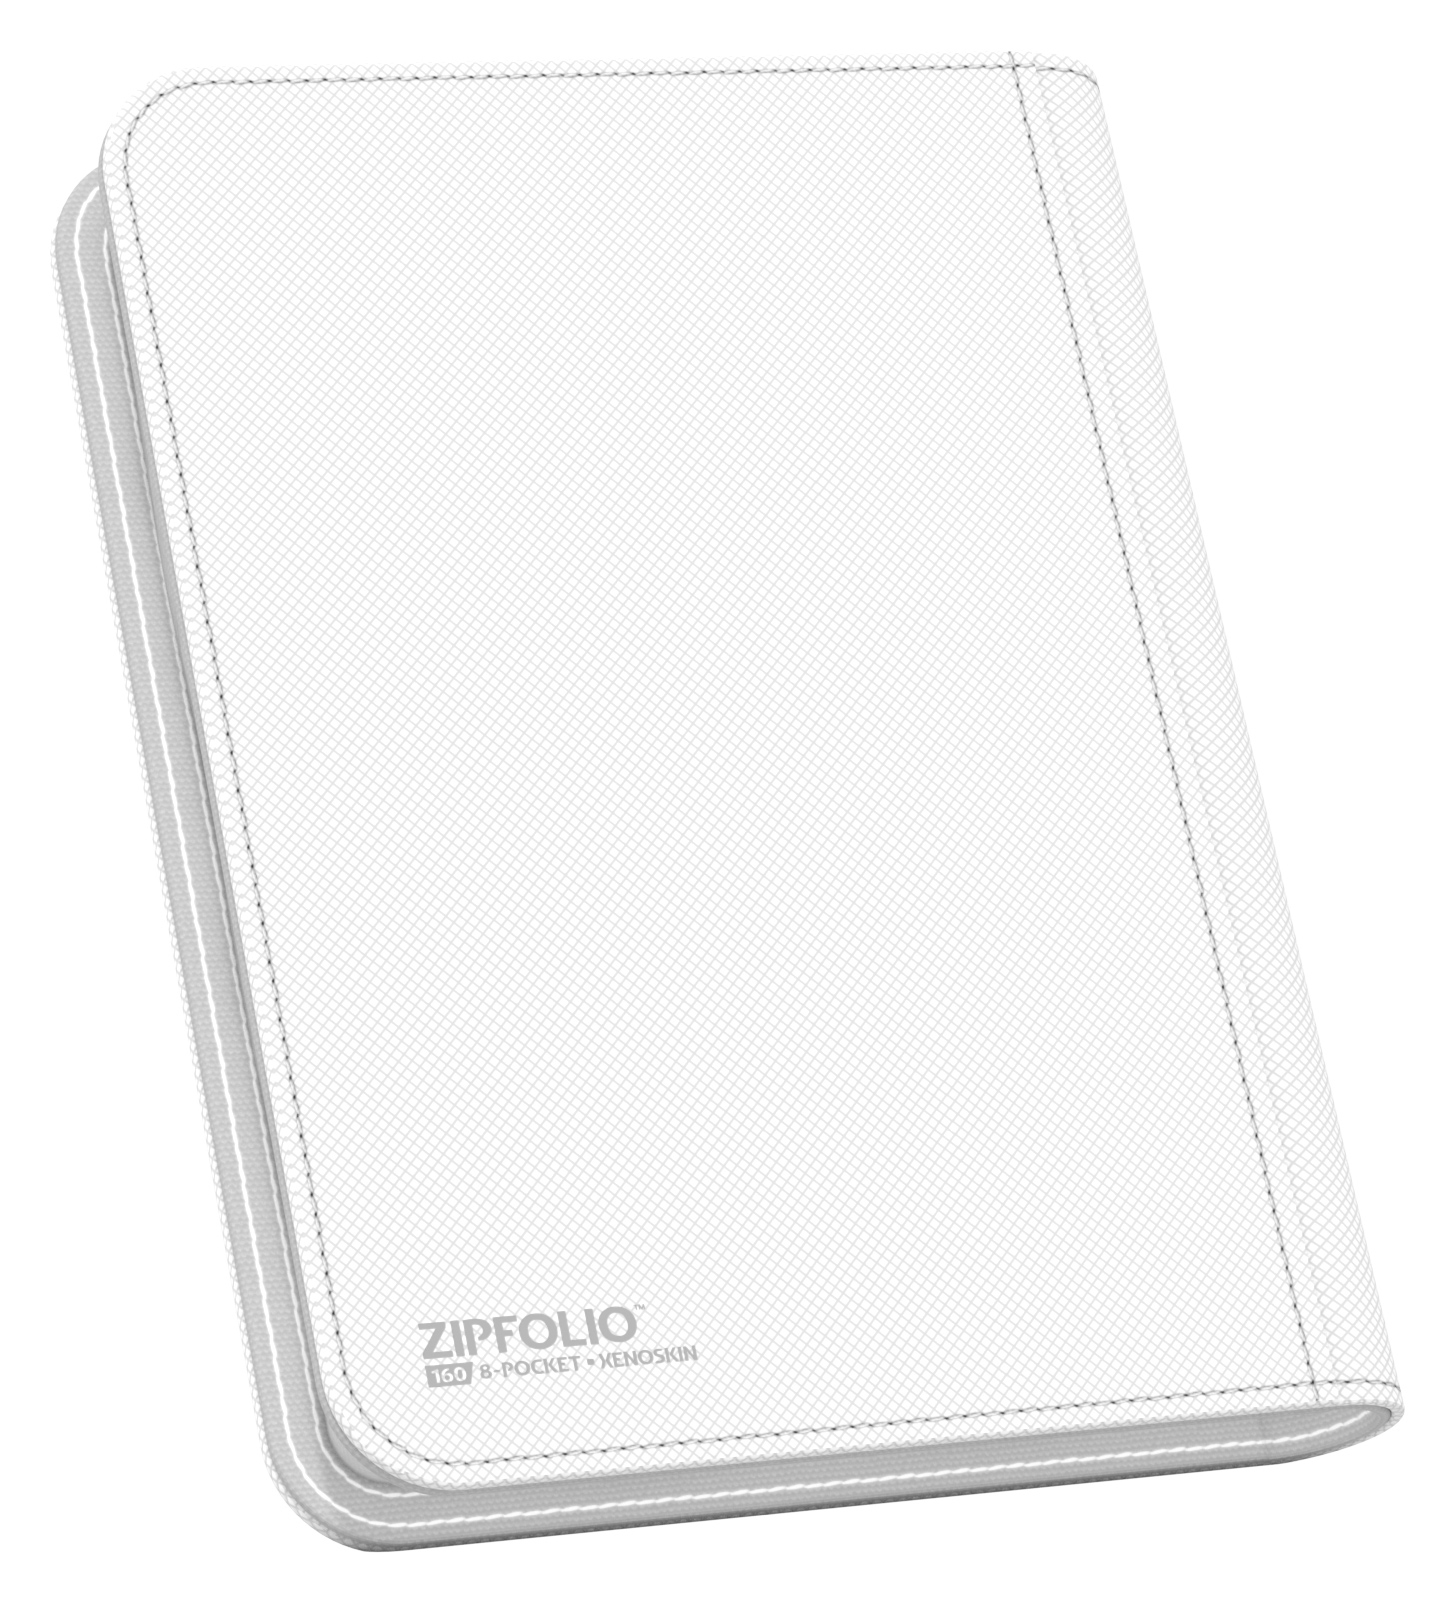 Zipfolio Xenoskin | White | Standard | 160 – 8 Pockets per page 